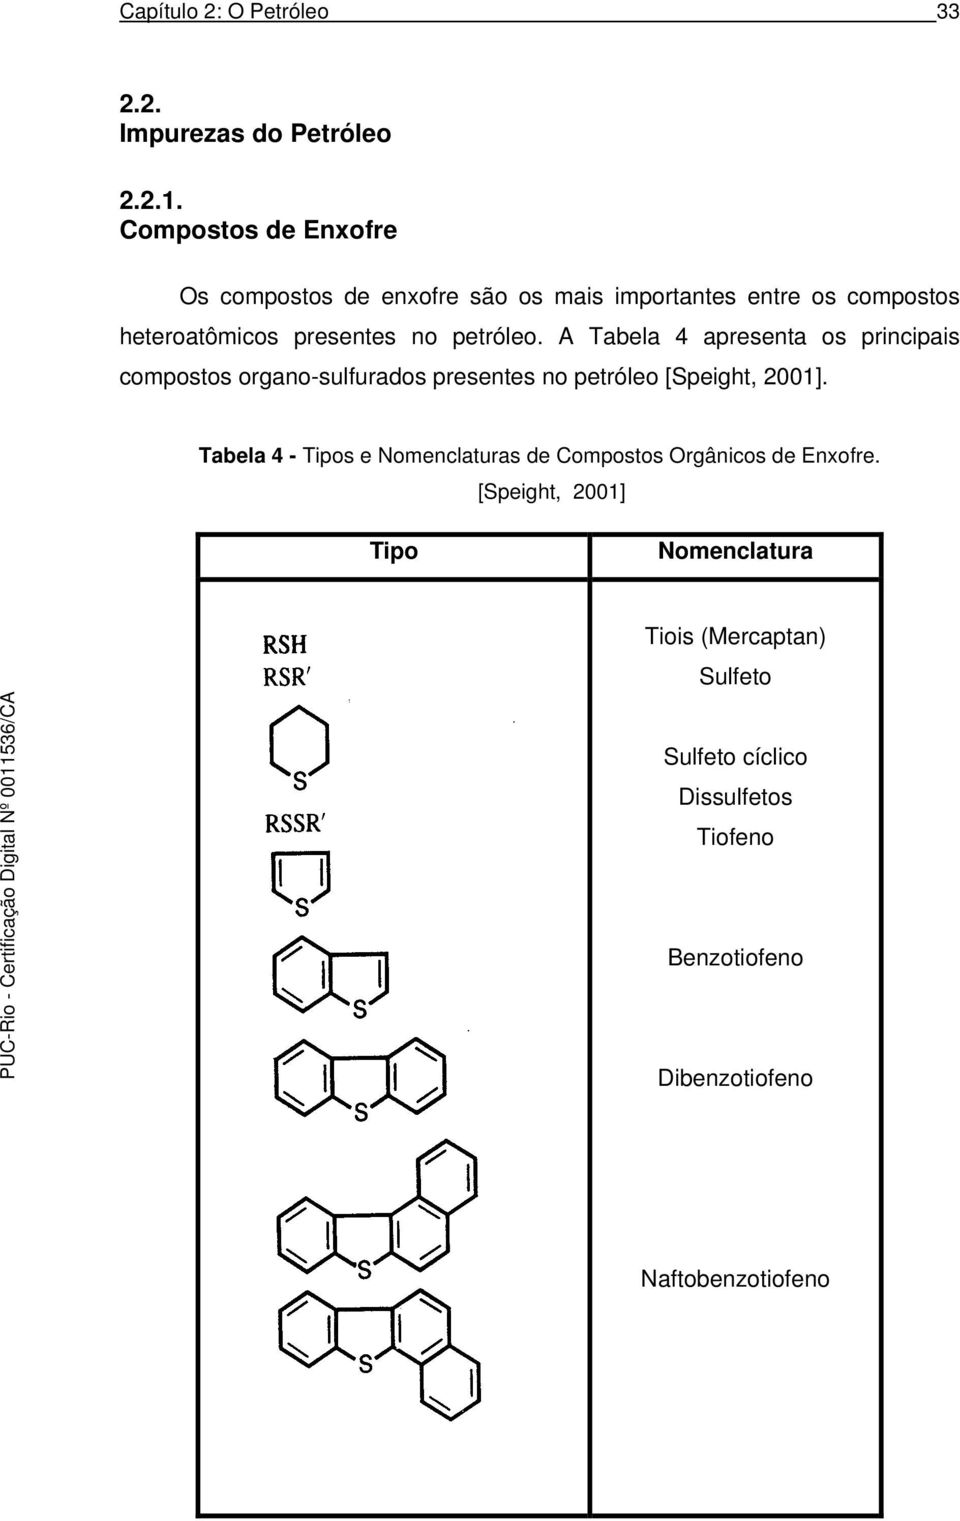 A Tabela 4 apresenta os principais compostos organo-sulfurados presentes no petróleo [Speight, 2001].